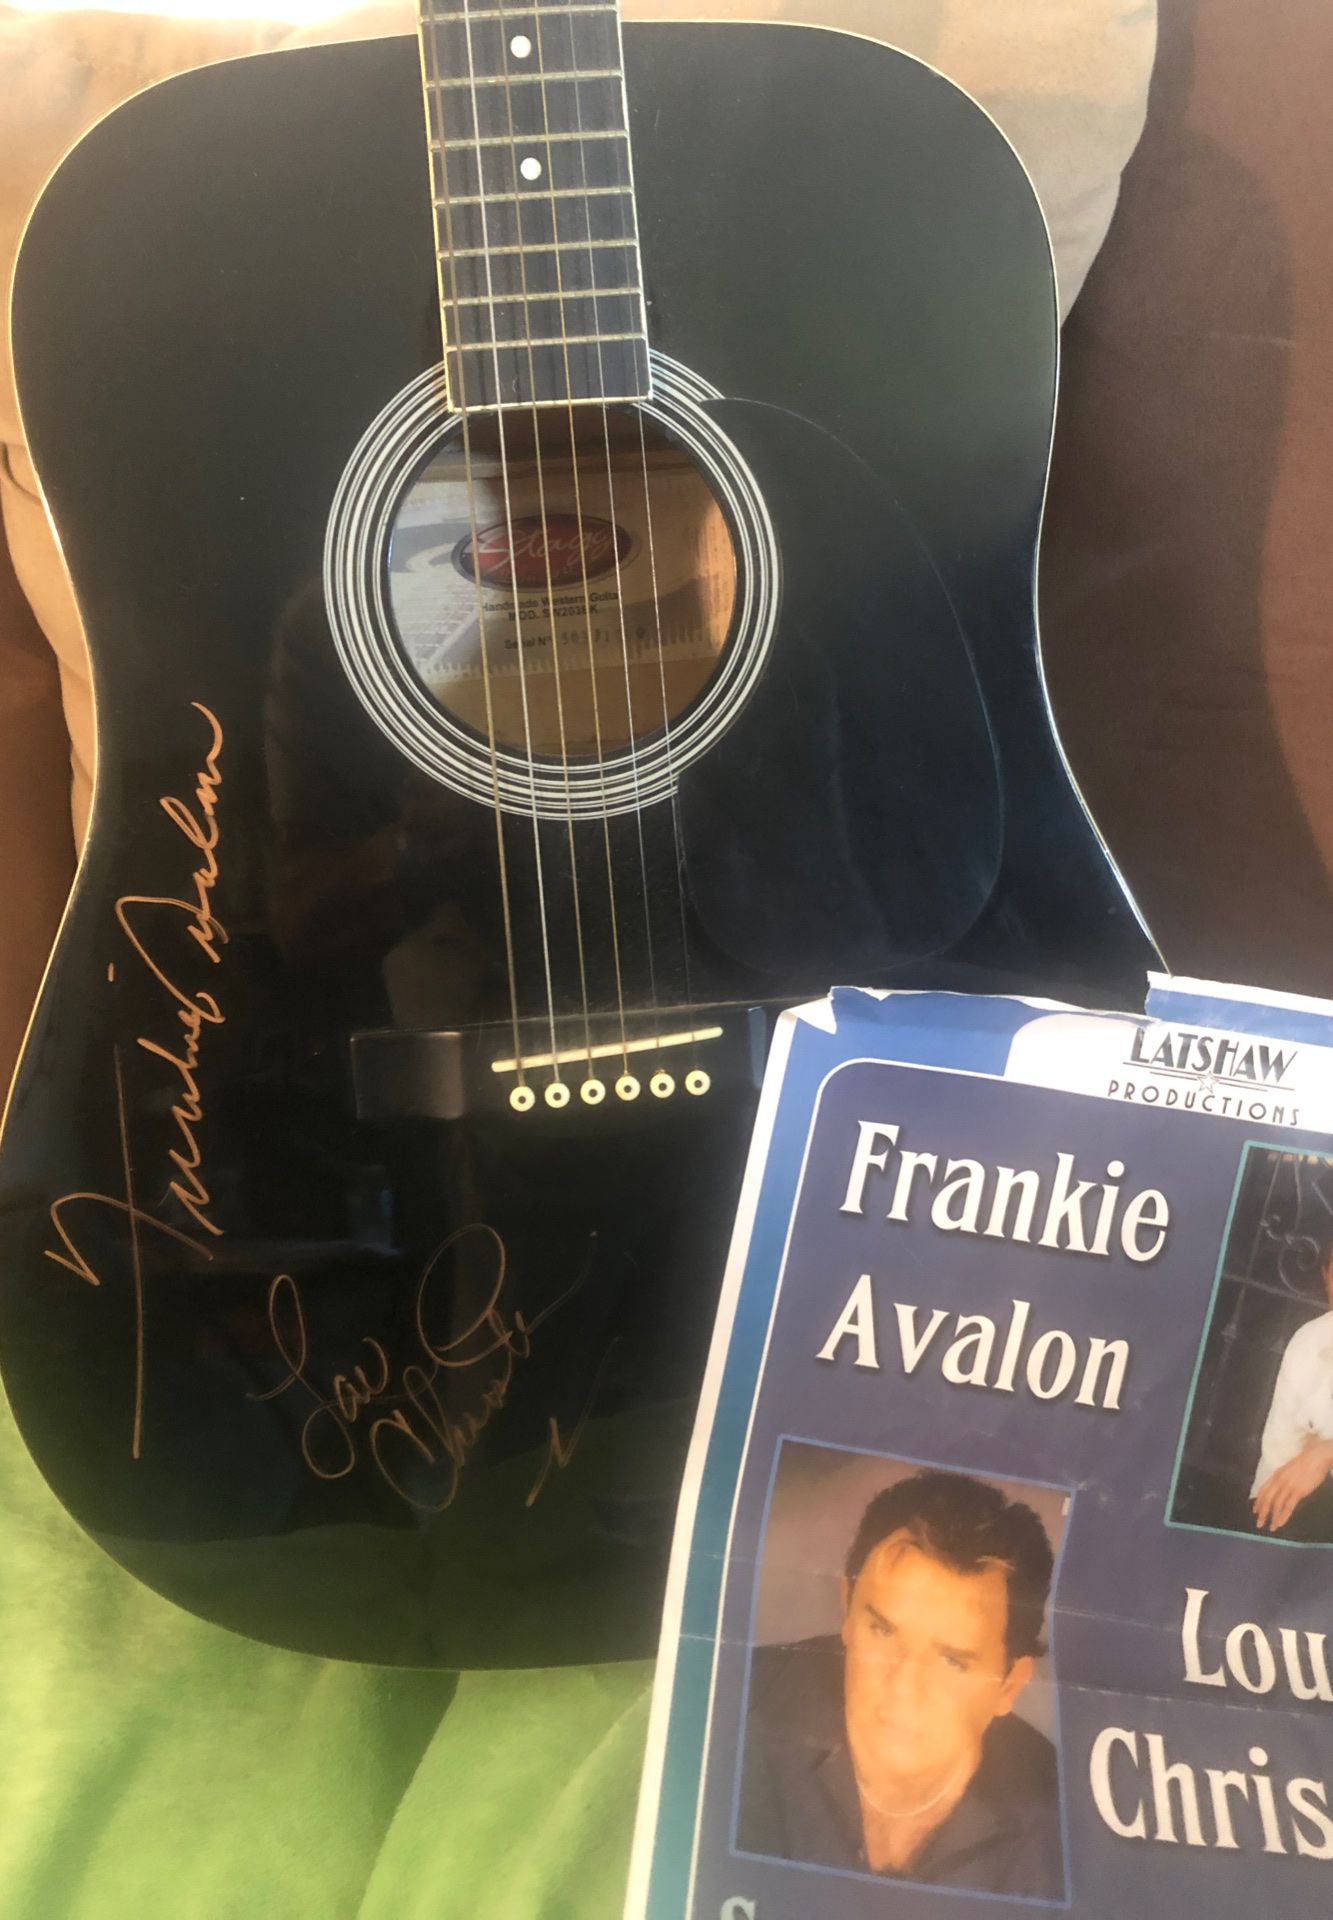 Frankie Avalon , Loe Christie Autographed Guitar